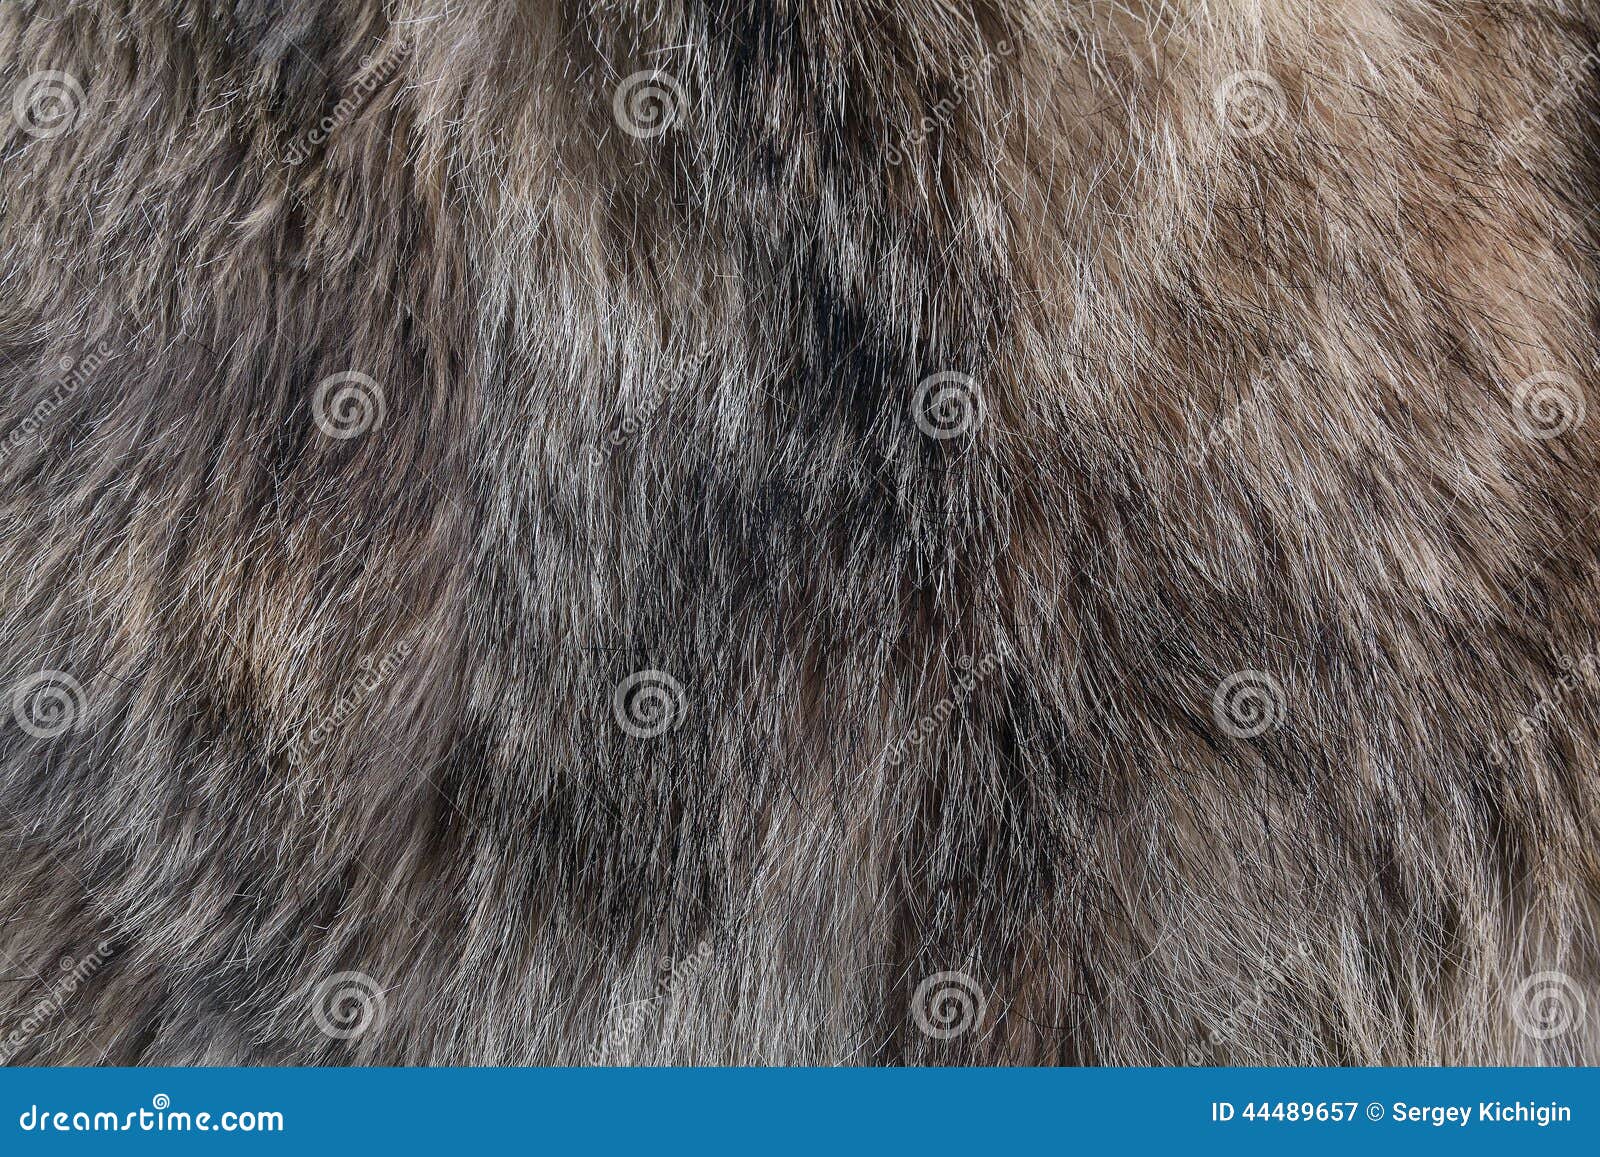 wolf fur texture natural